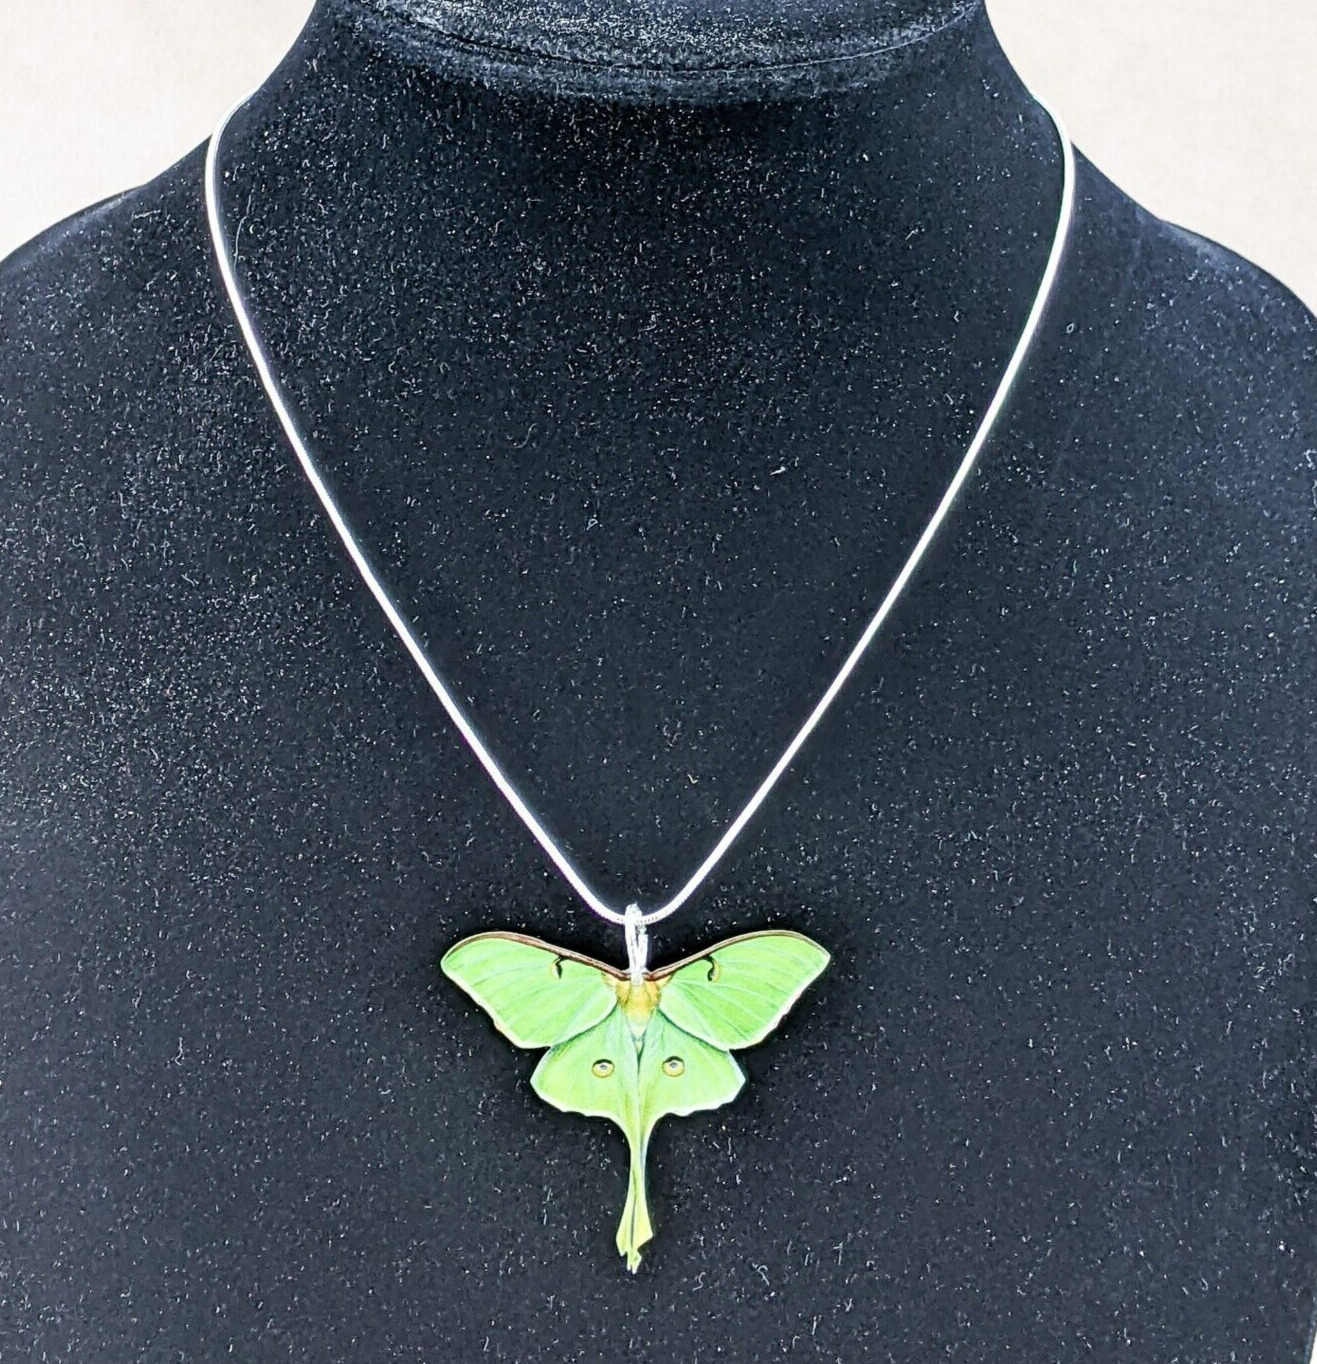 o62r Luna Moth Necklace Oddity Curiosity Mystical Fairy jewelry Acrylic pendent